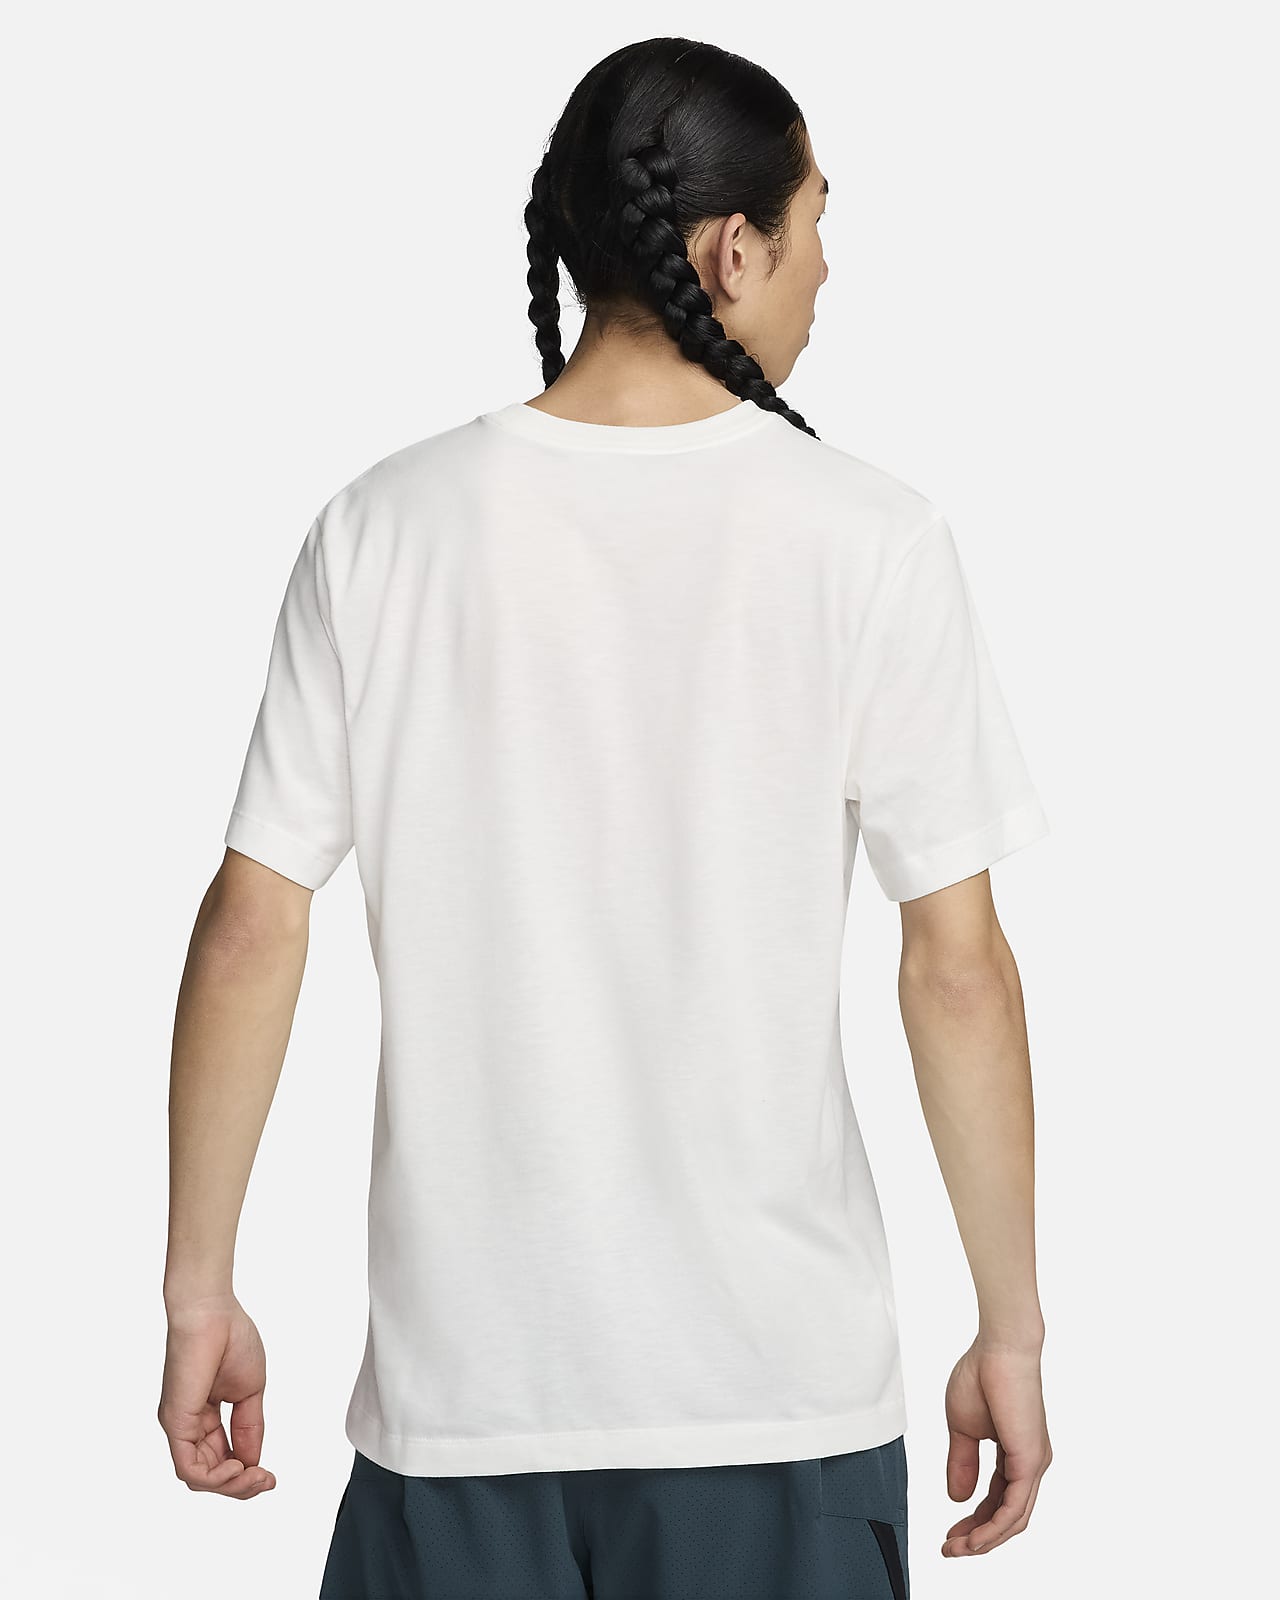 Yoga Tops & T-Shirts. Nike JP